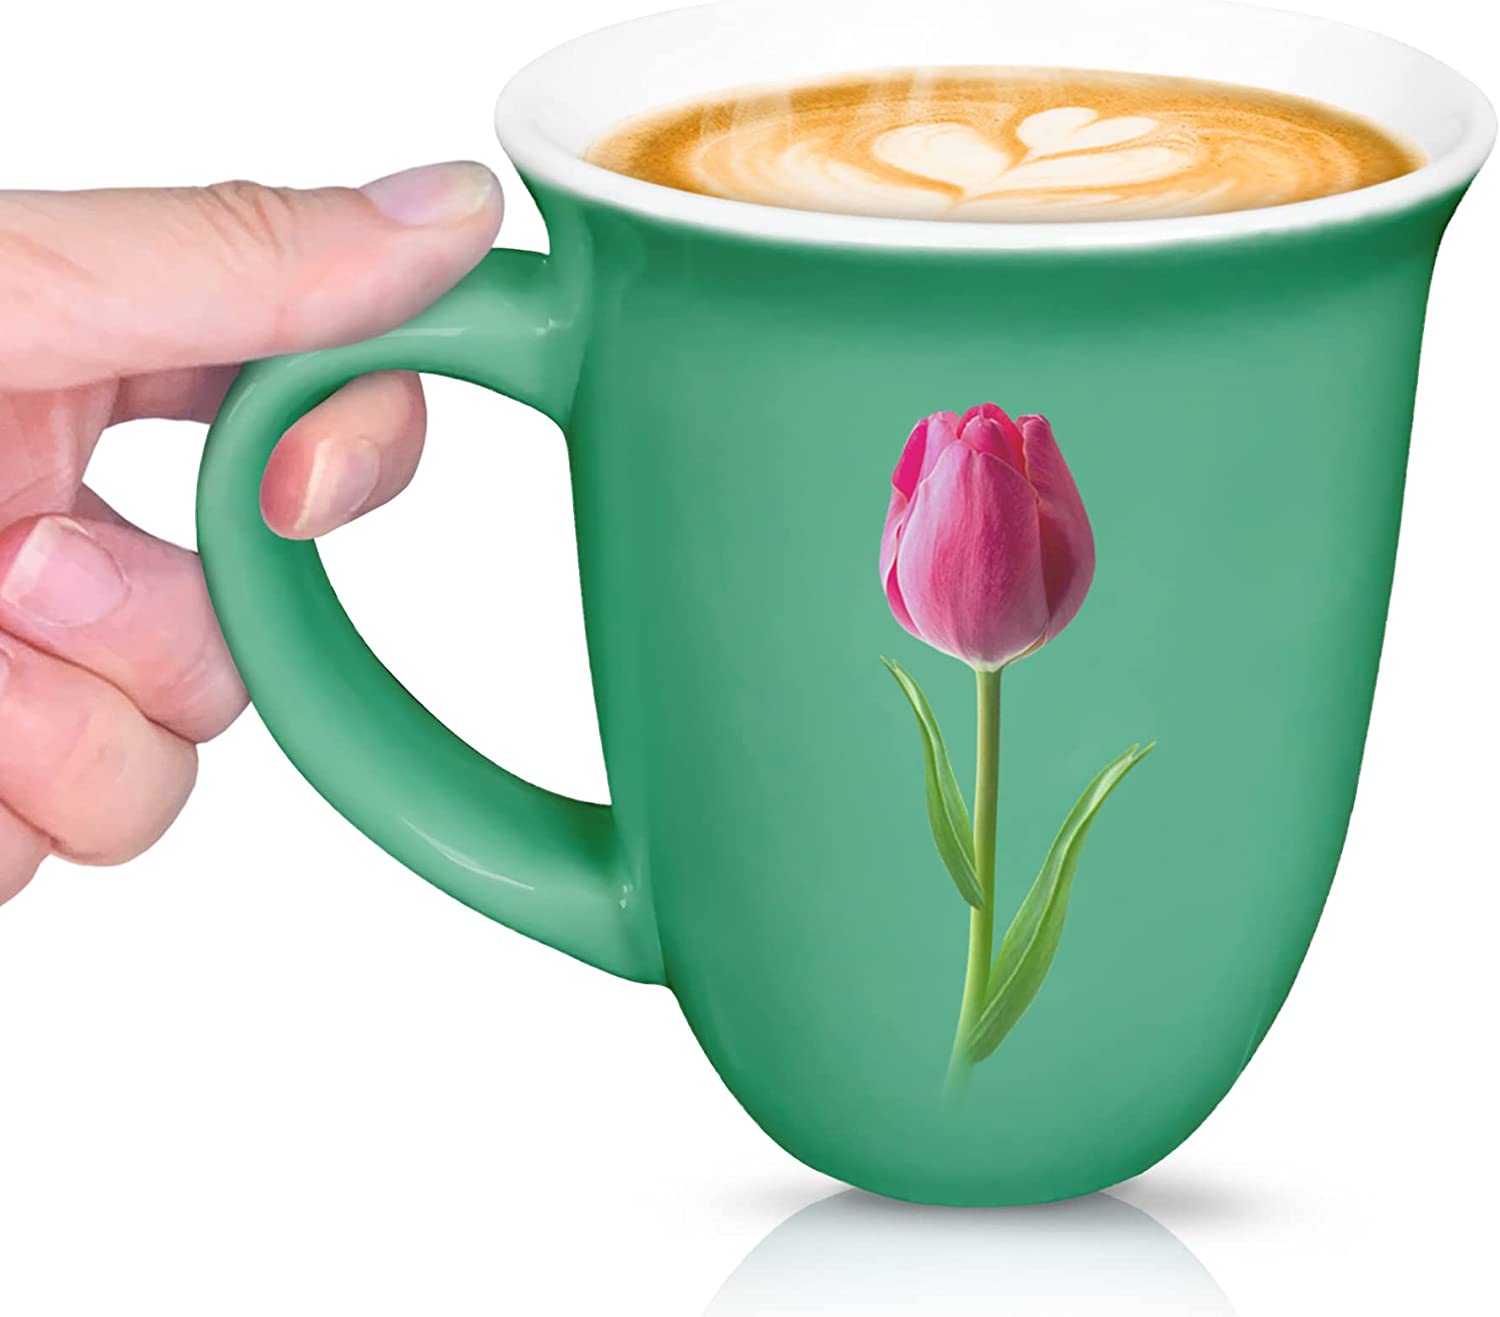 To See a Heaven in a Flower Coffee Mug (1 Mug) for Women 15 Oz